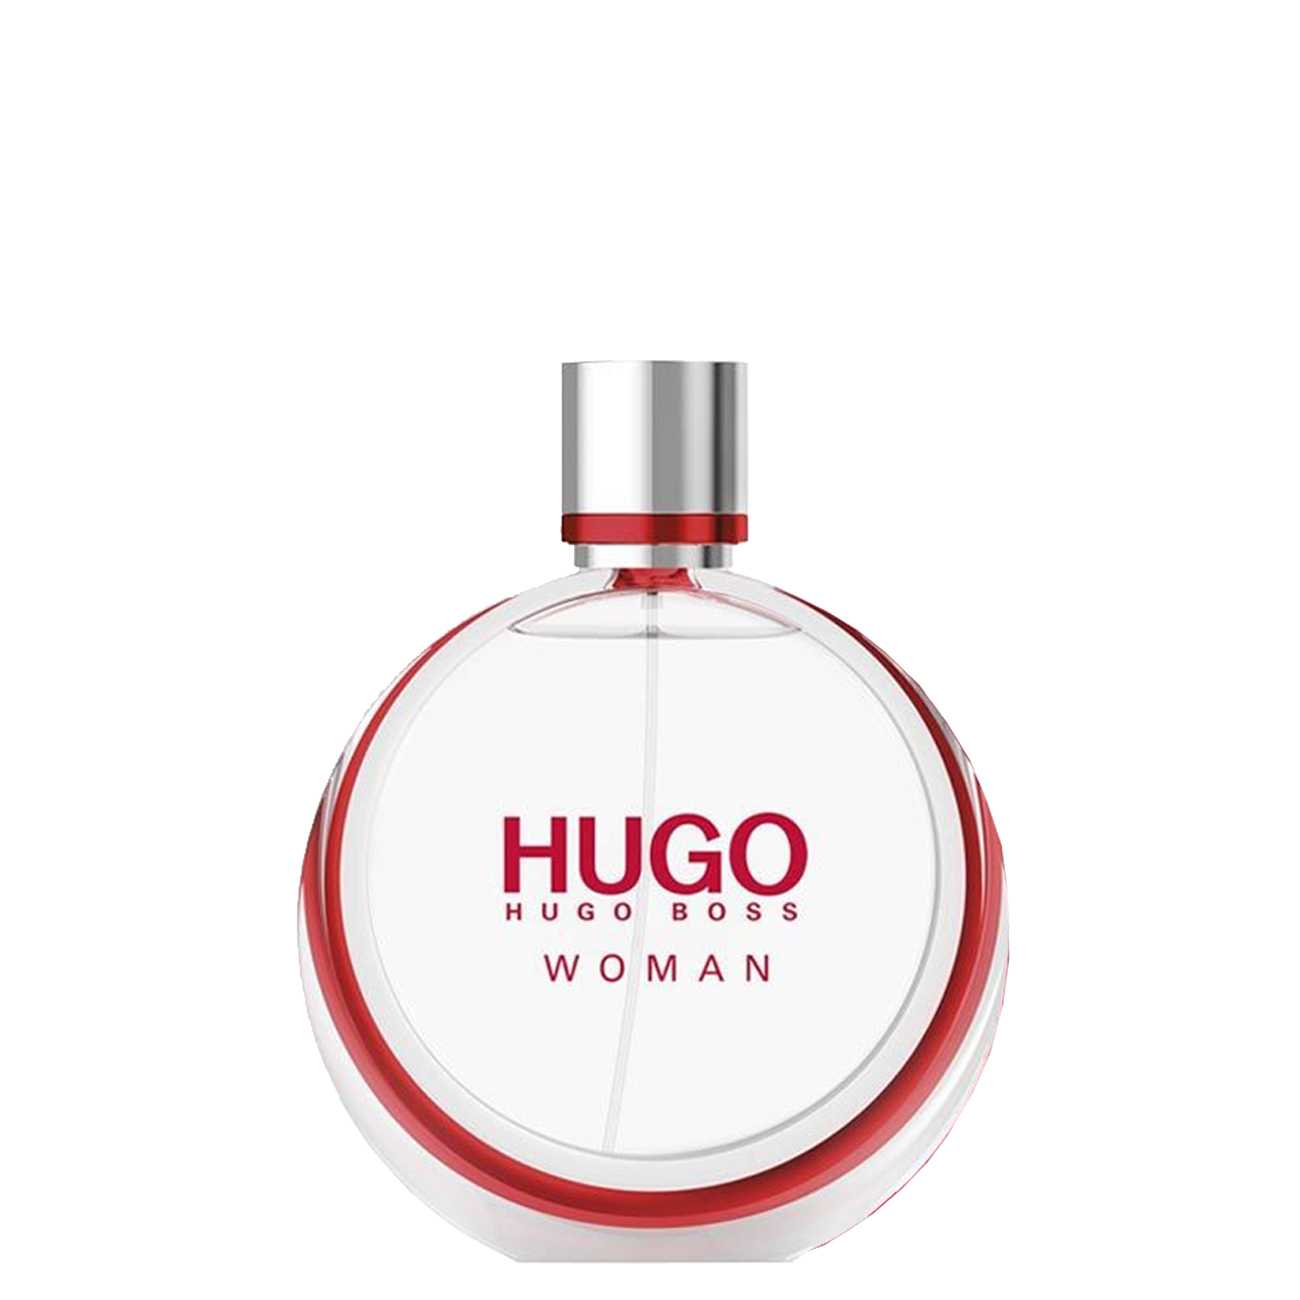 Apa de Parfum Hugo Boss WOMAN 50ml cu comanda online